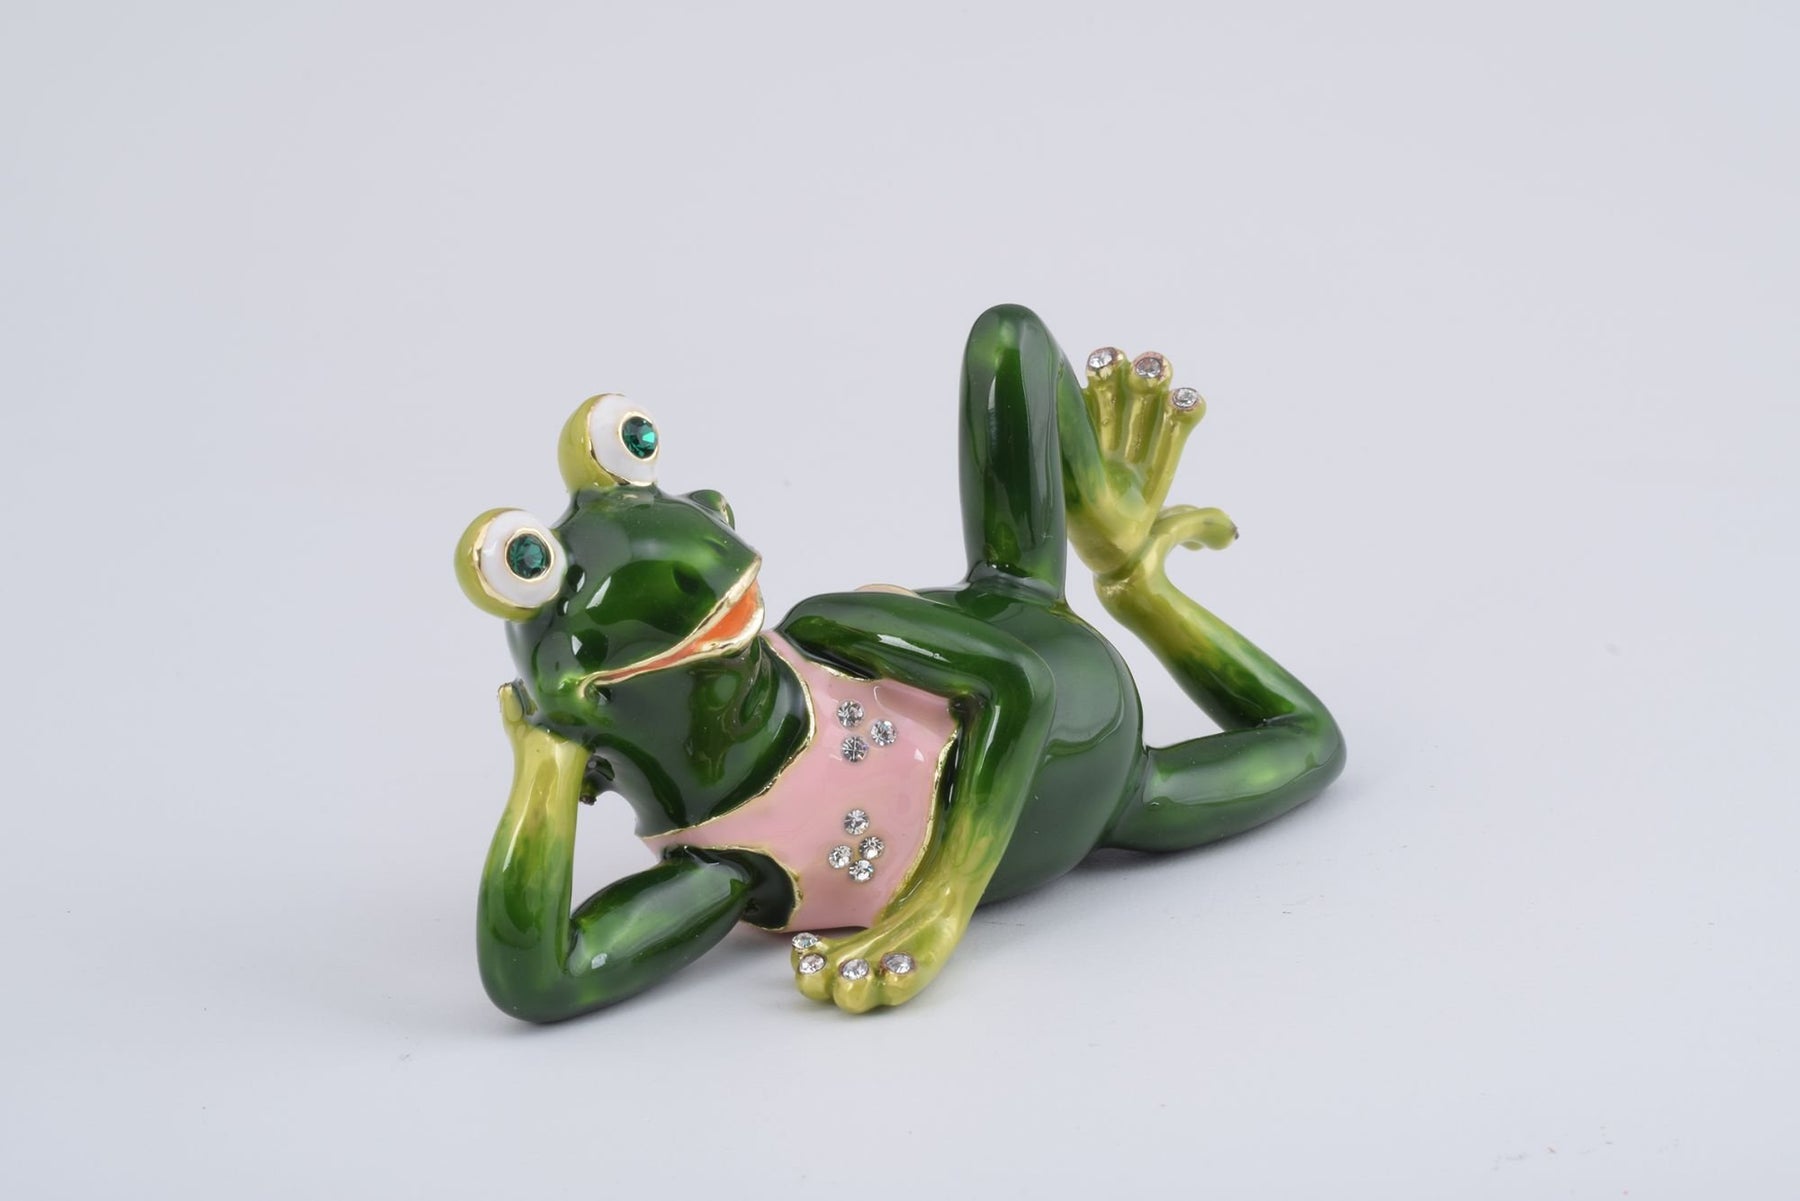 Keren Kopal Gymnastic Frog with a Pink Shirt  62.62